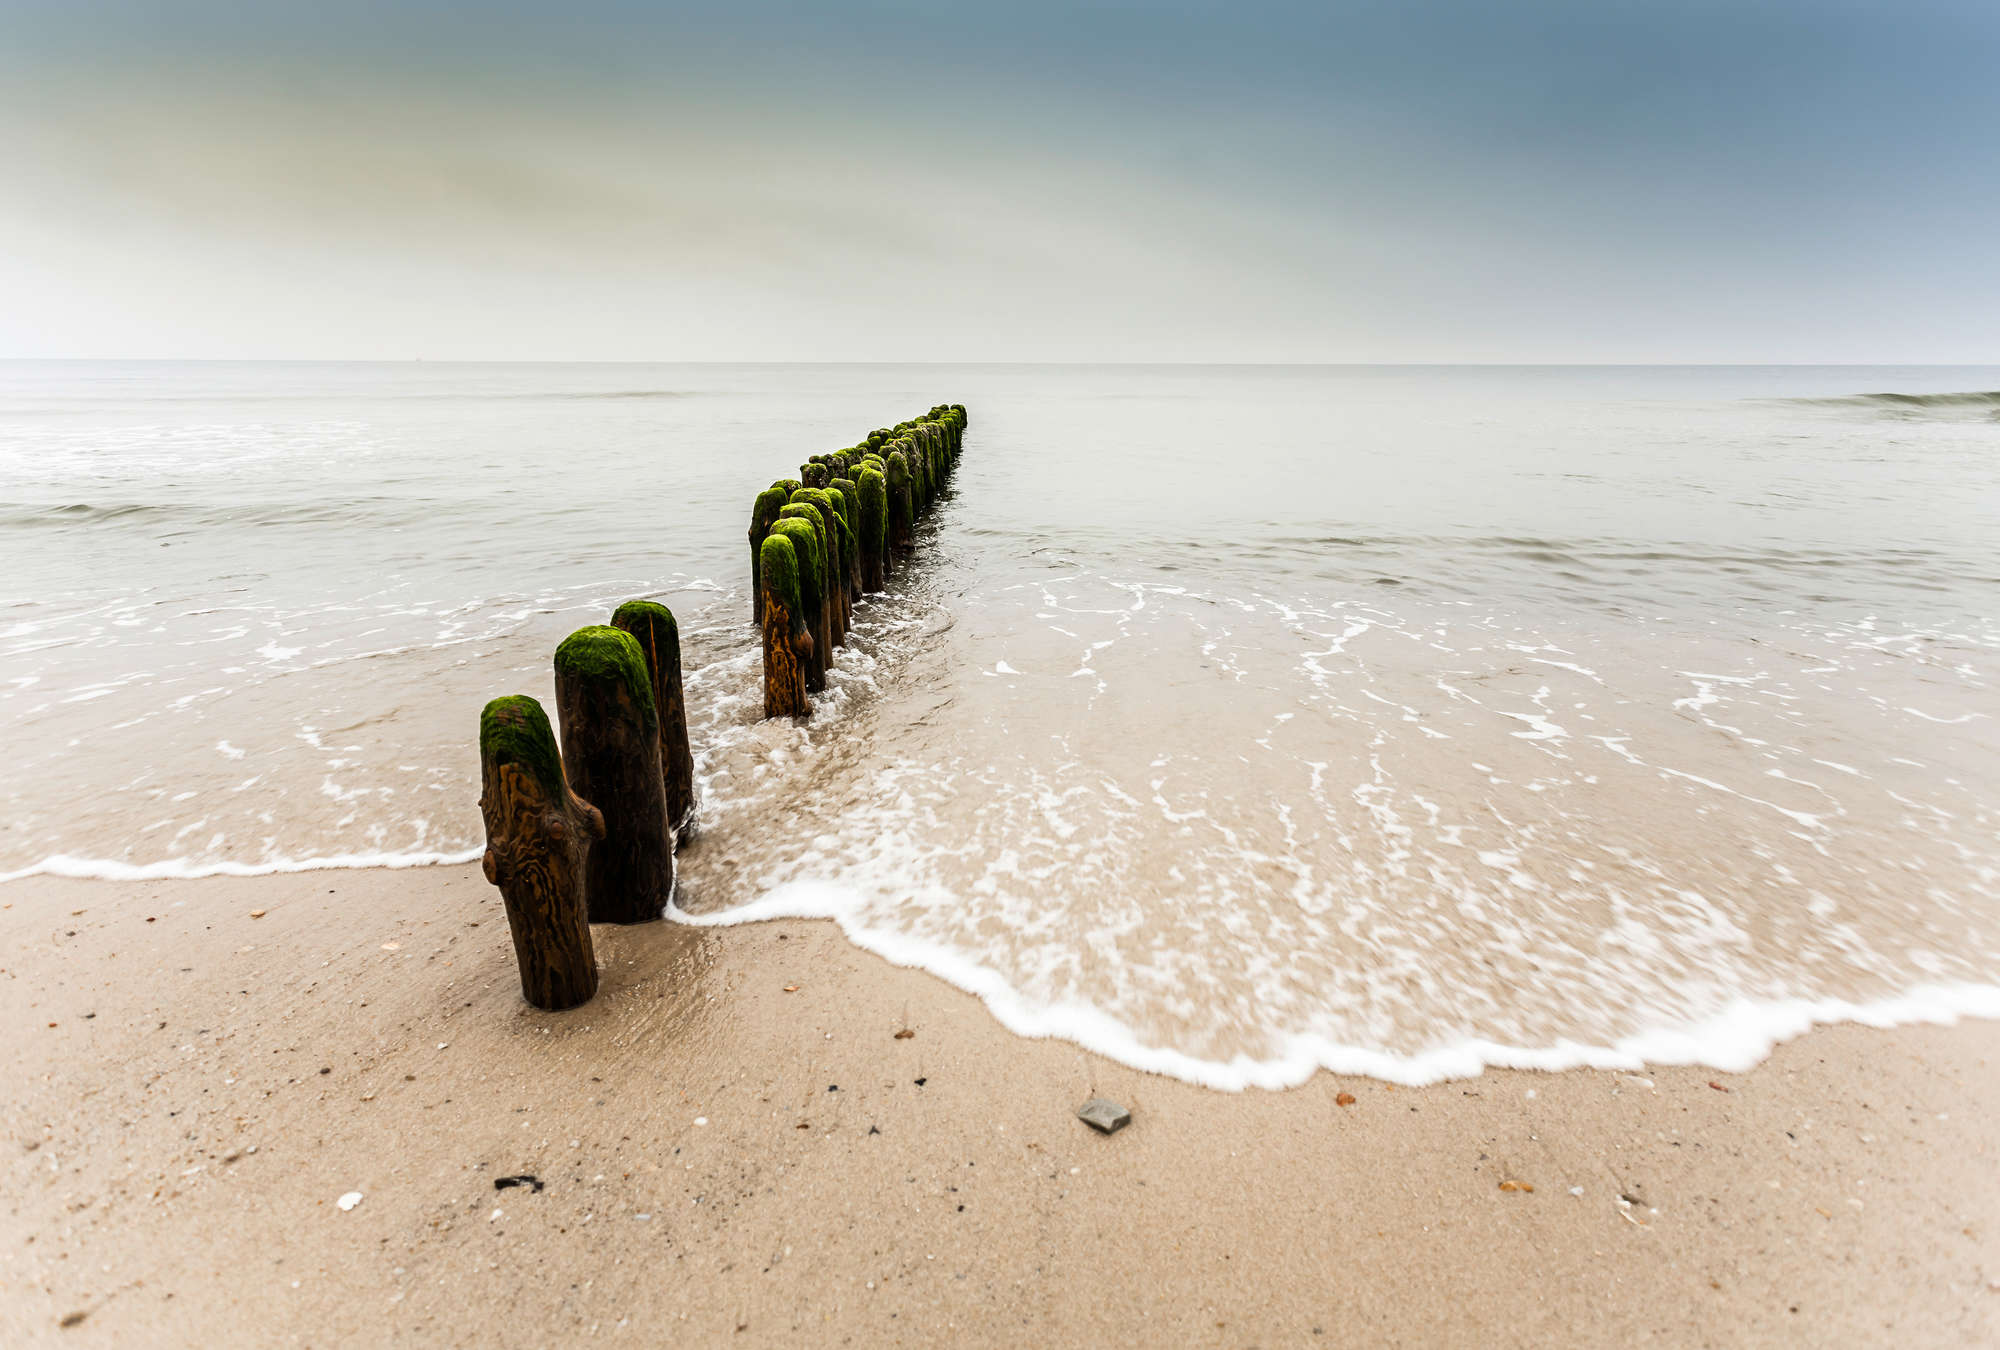             Photo wallpaper breakwater - wooden piles in the sea
        